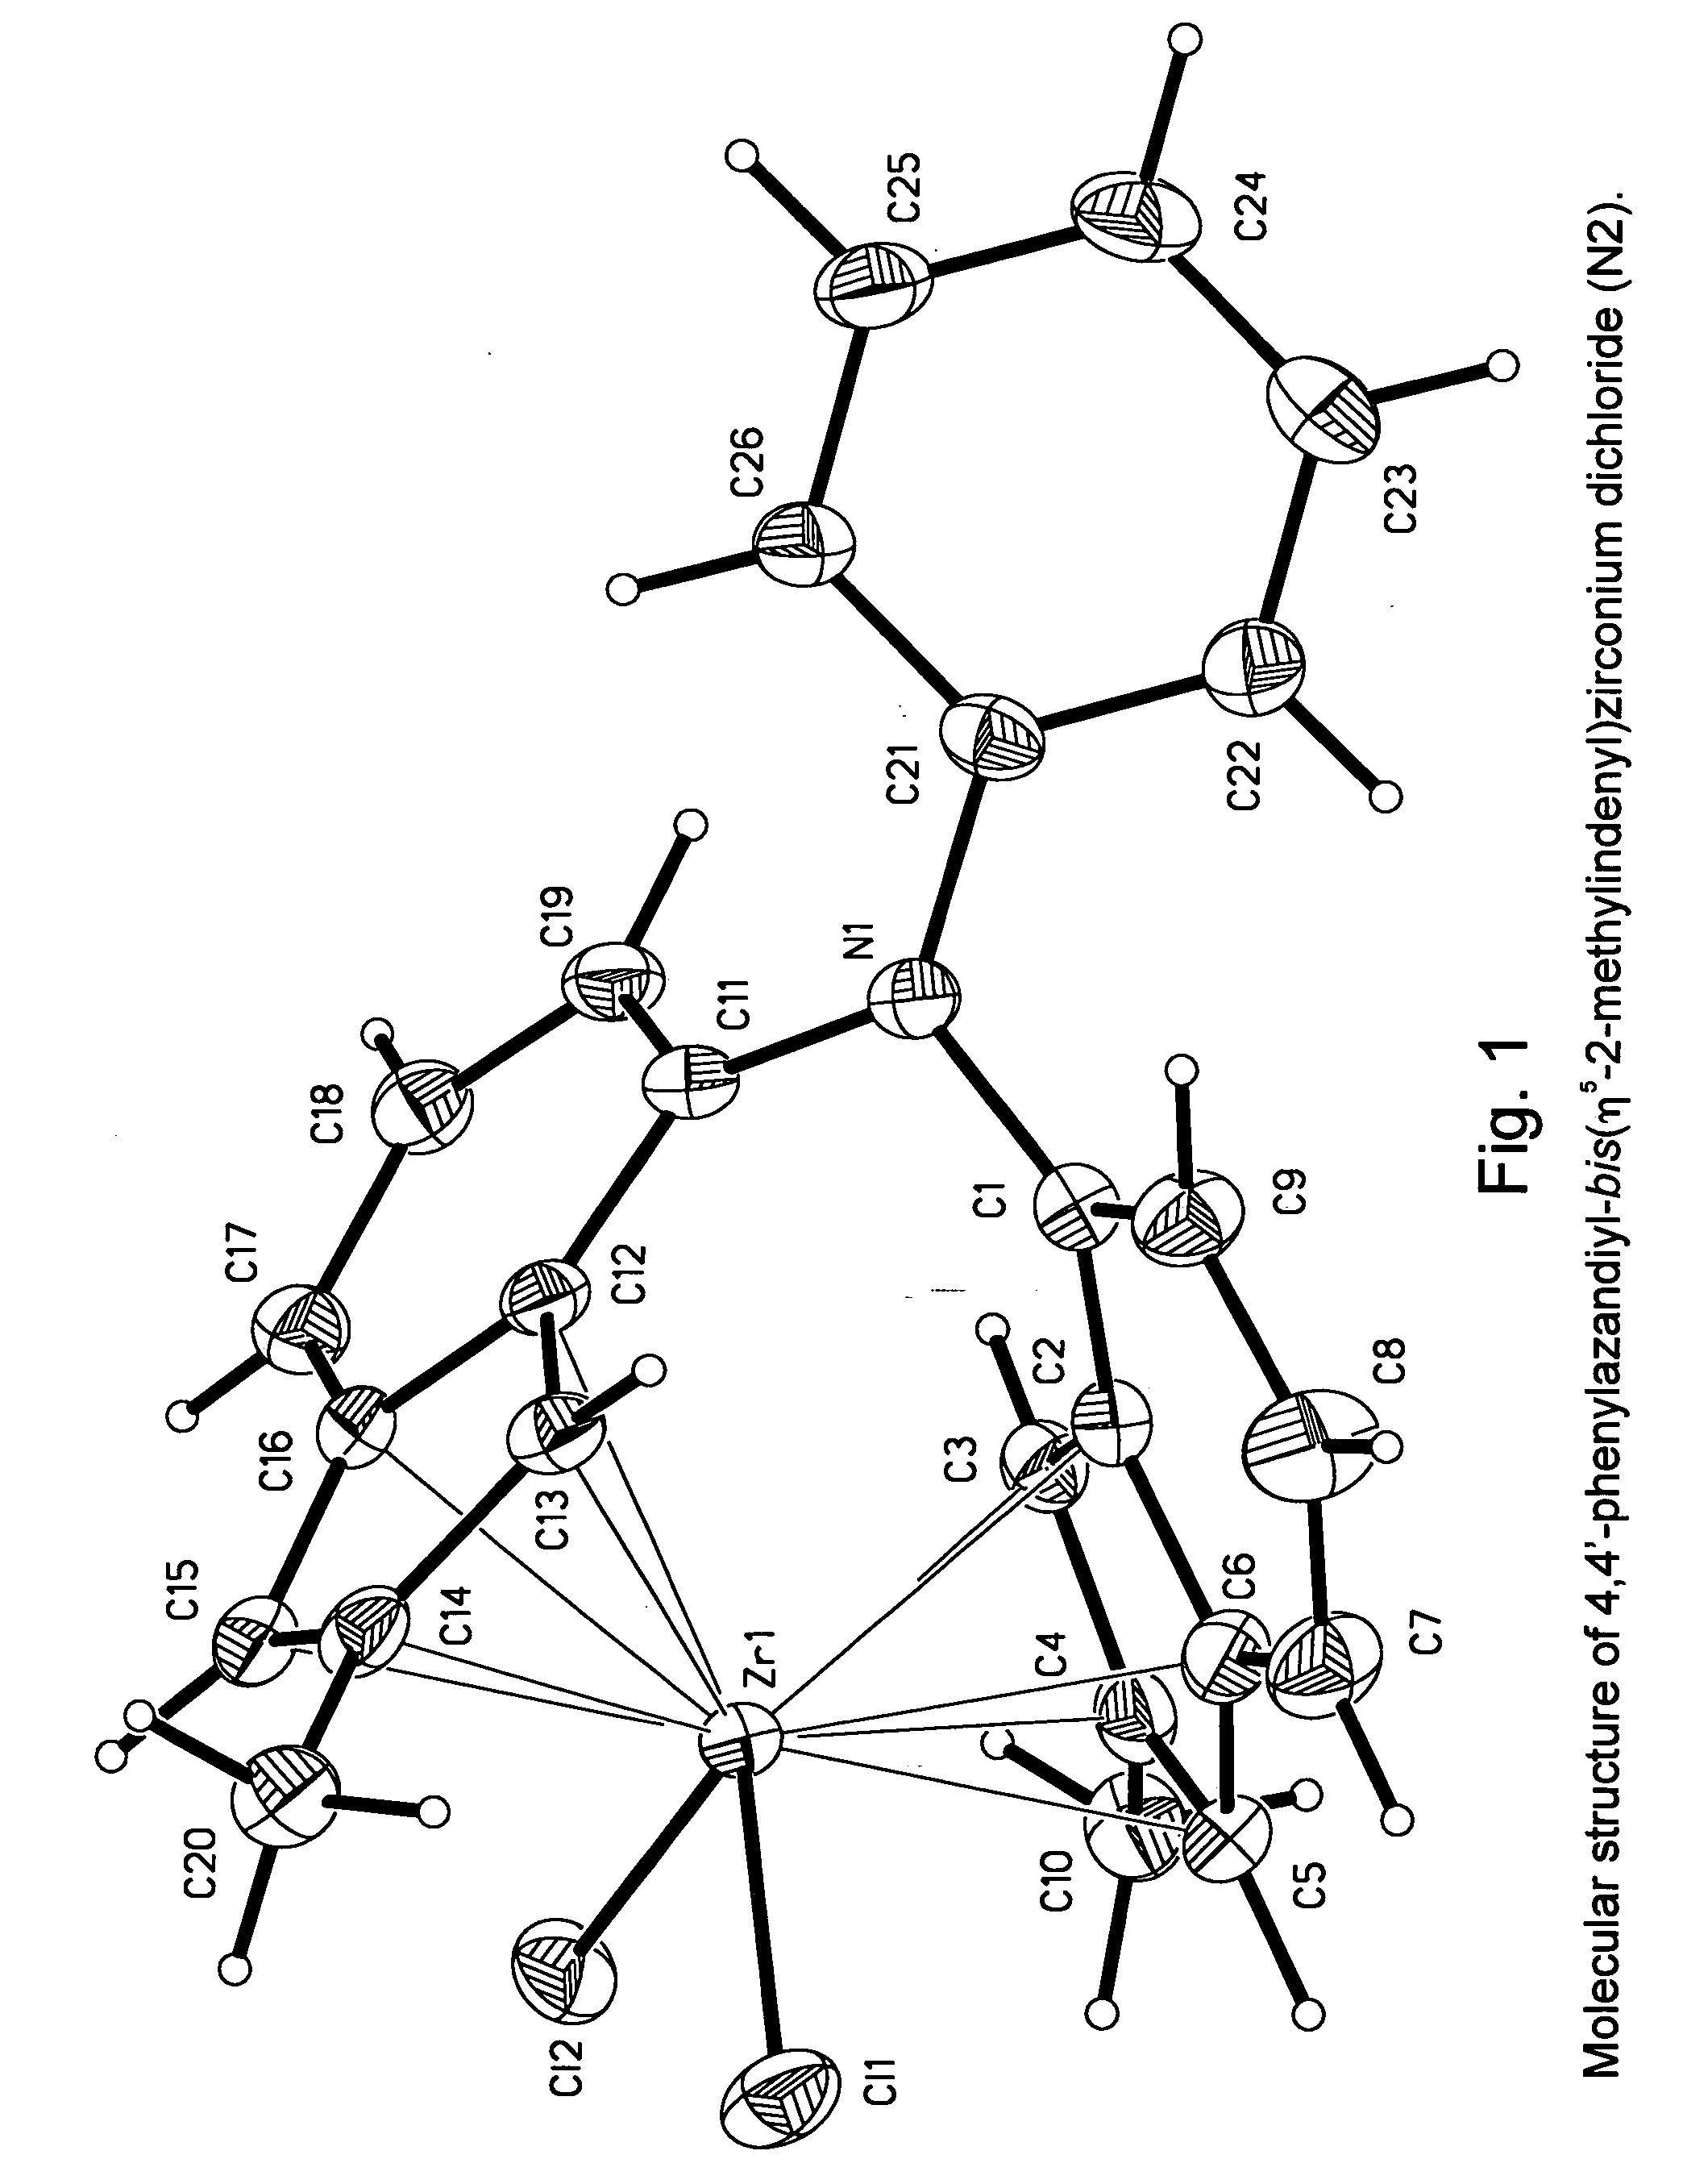 Heteroatom bridged metallocene compounds for olefin polymerization